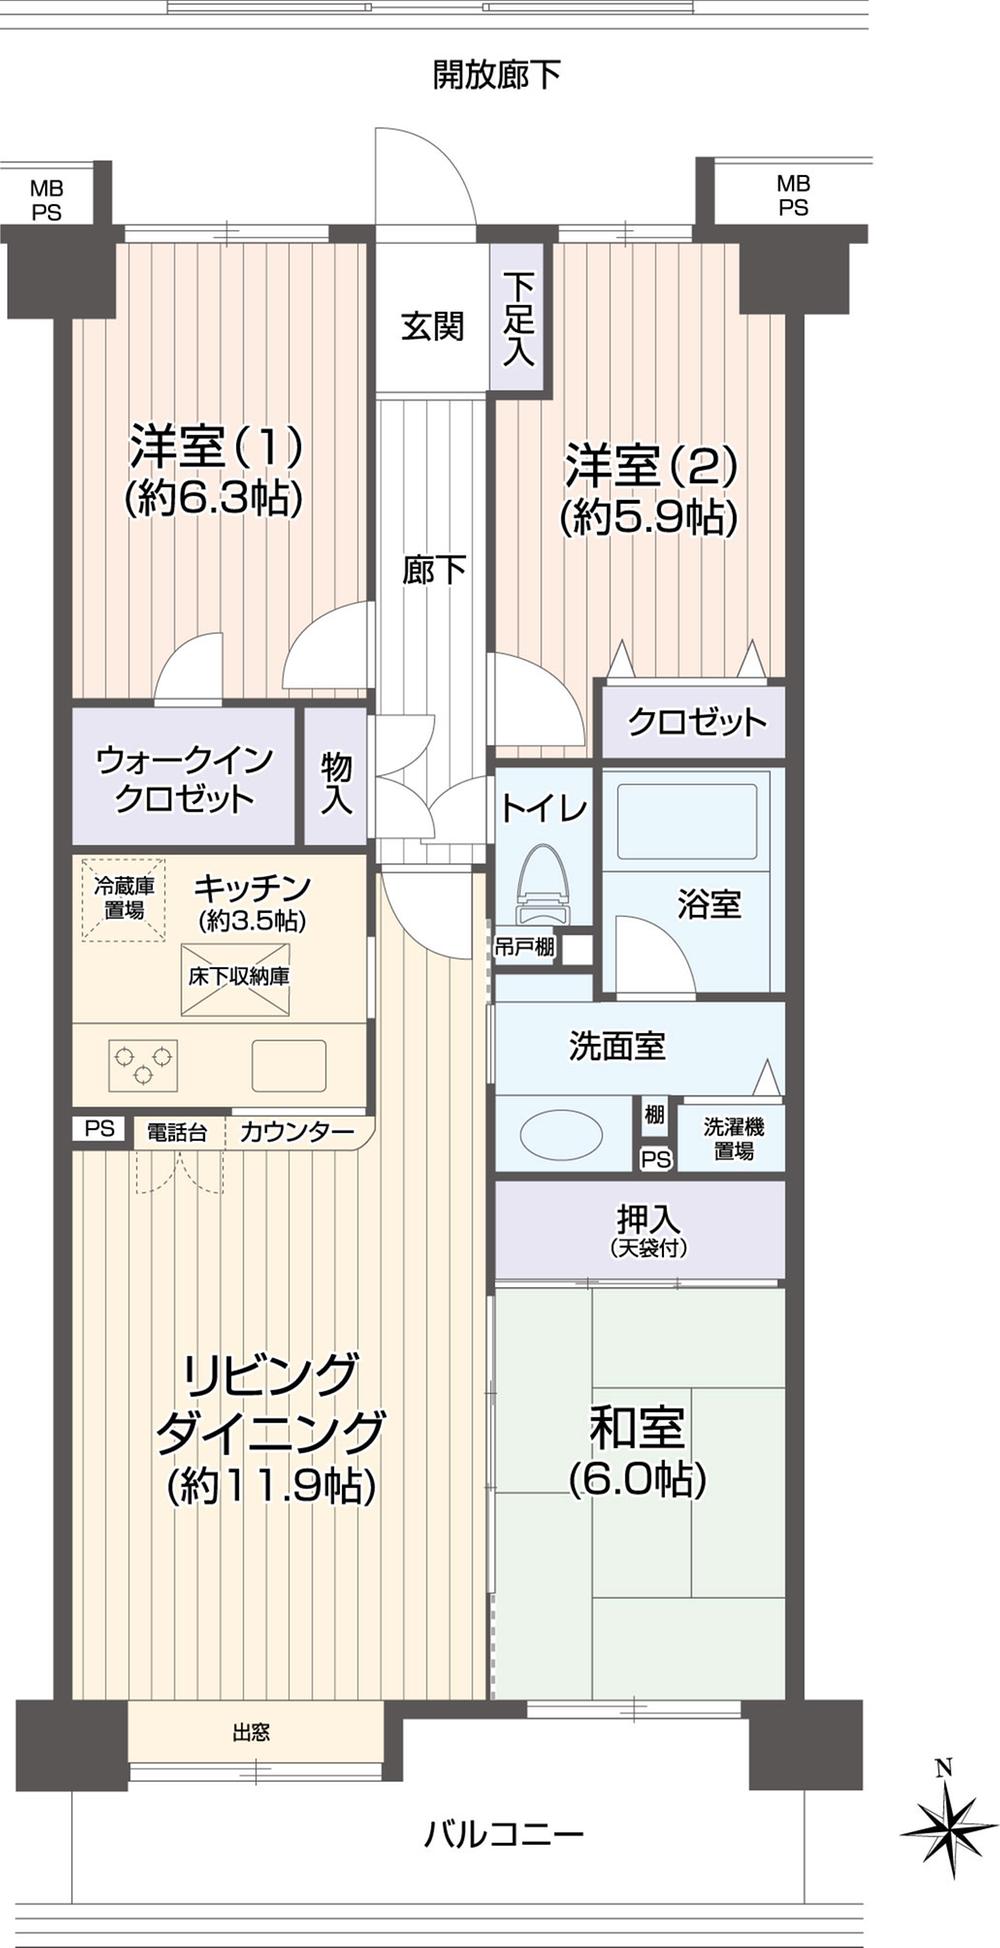 Floor plan. 3LDK, Price 24,800,000 yen, Footprint 77.5 sq m , Balcony area 11.16 sq m